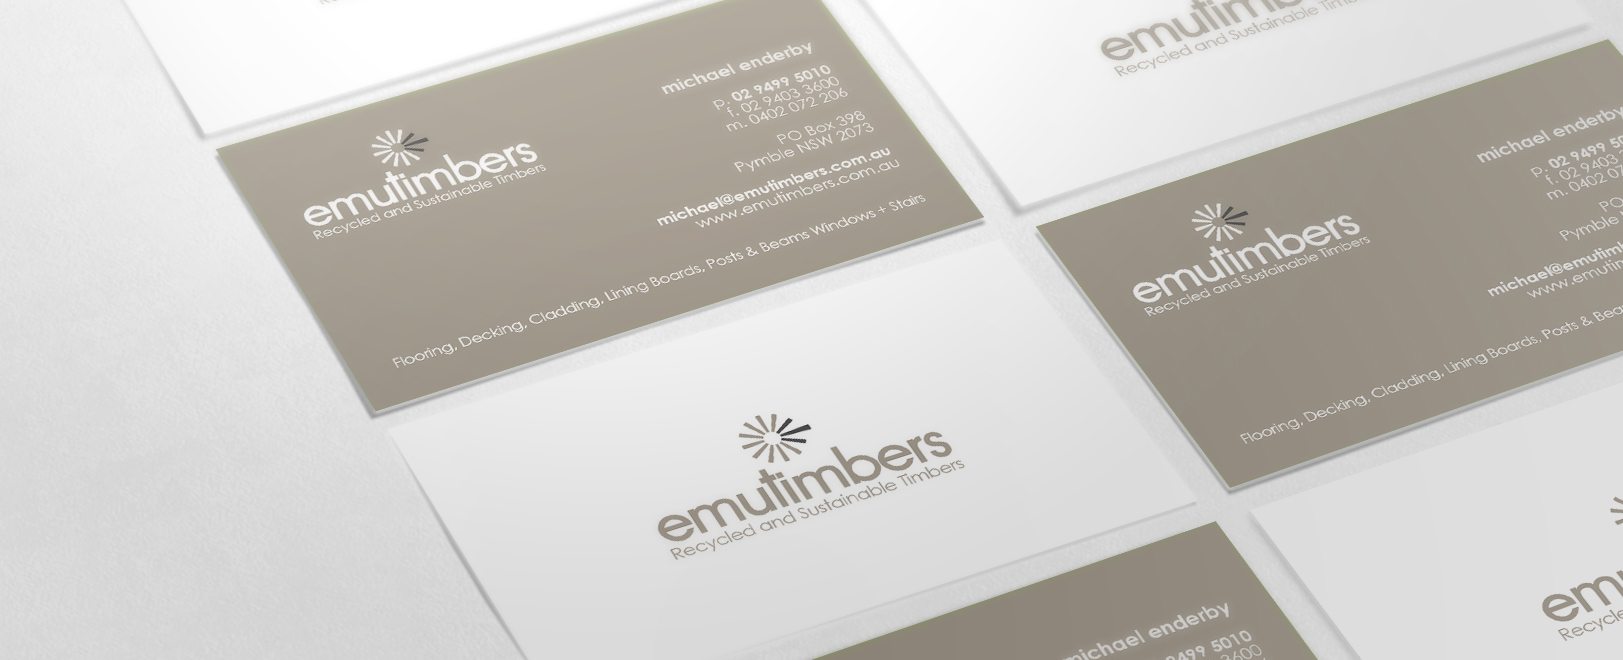 Emu Timbers - Cronulla Web Design - Website Design Sutherland